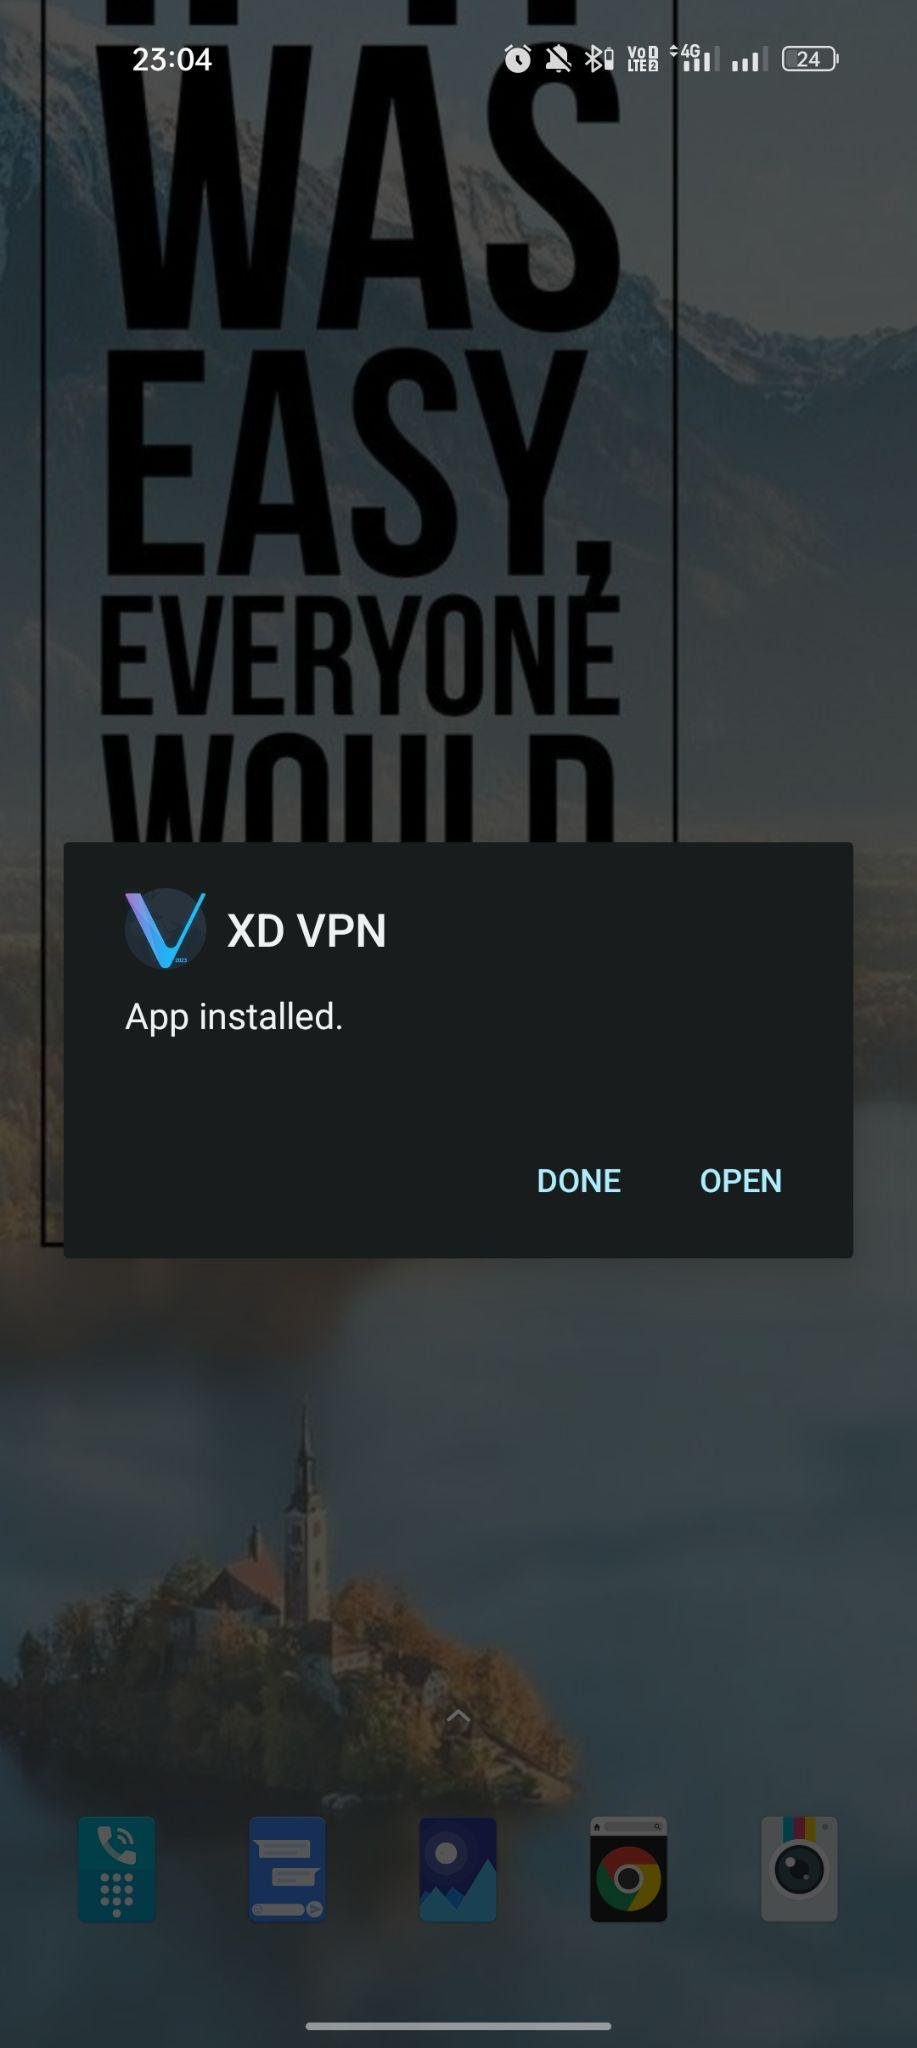 Xd VPN apk installed